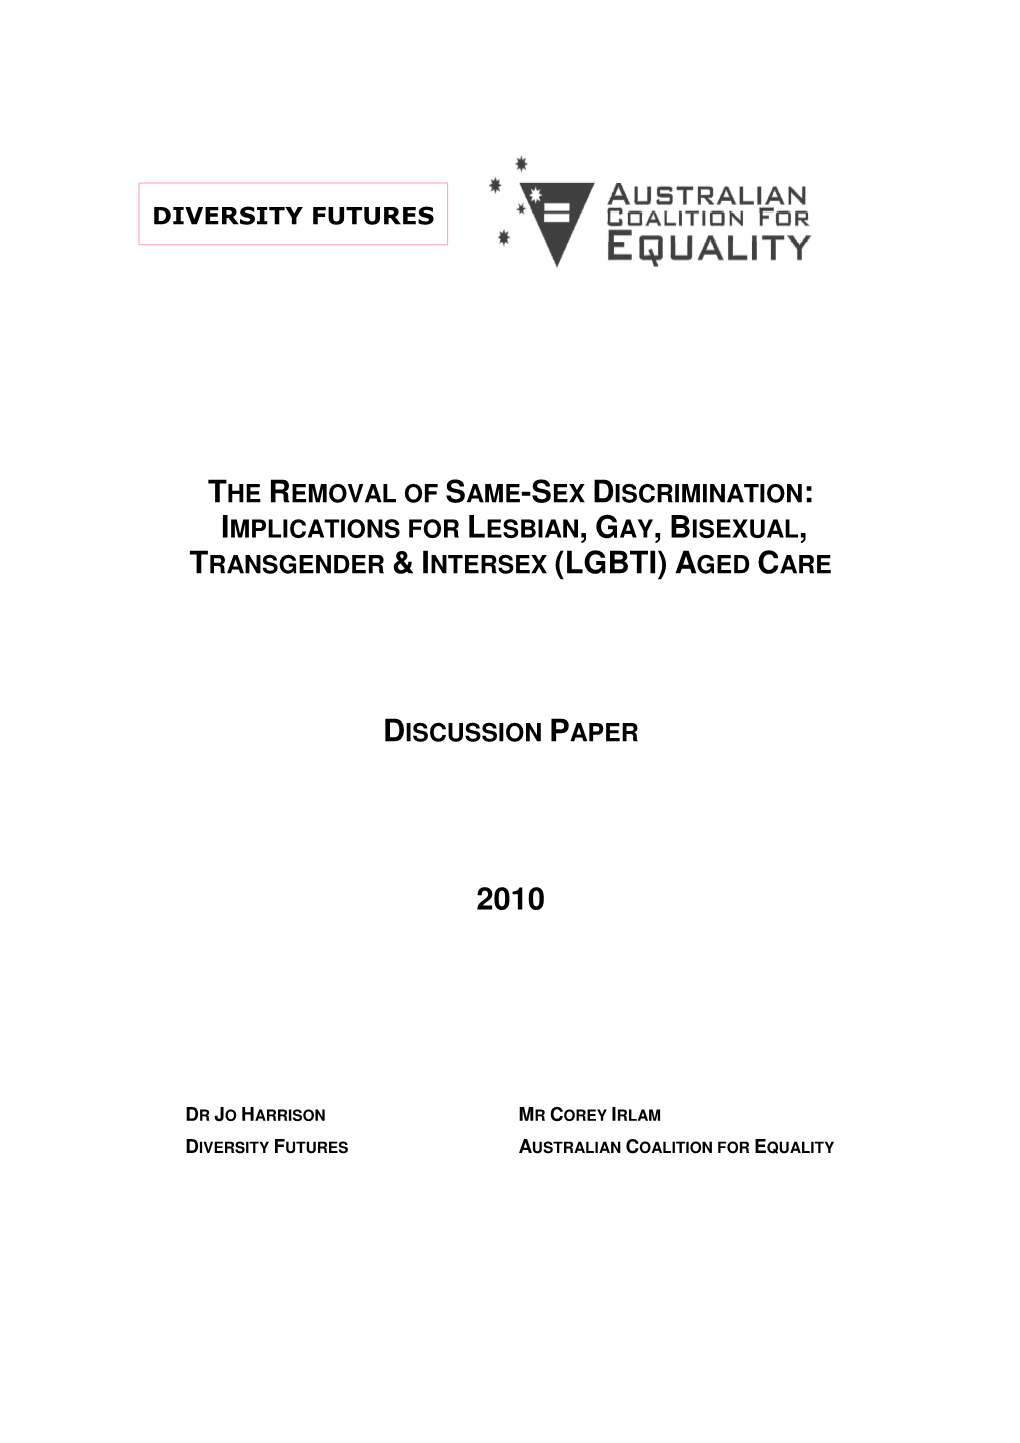 Implications for Lesbian, Gay, Bisexual, Transgender & Intersex (Lgbti)